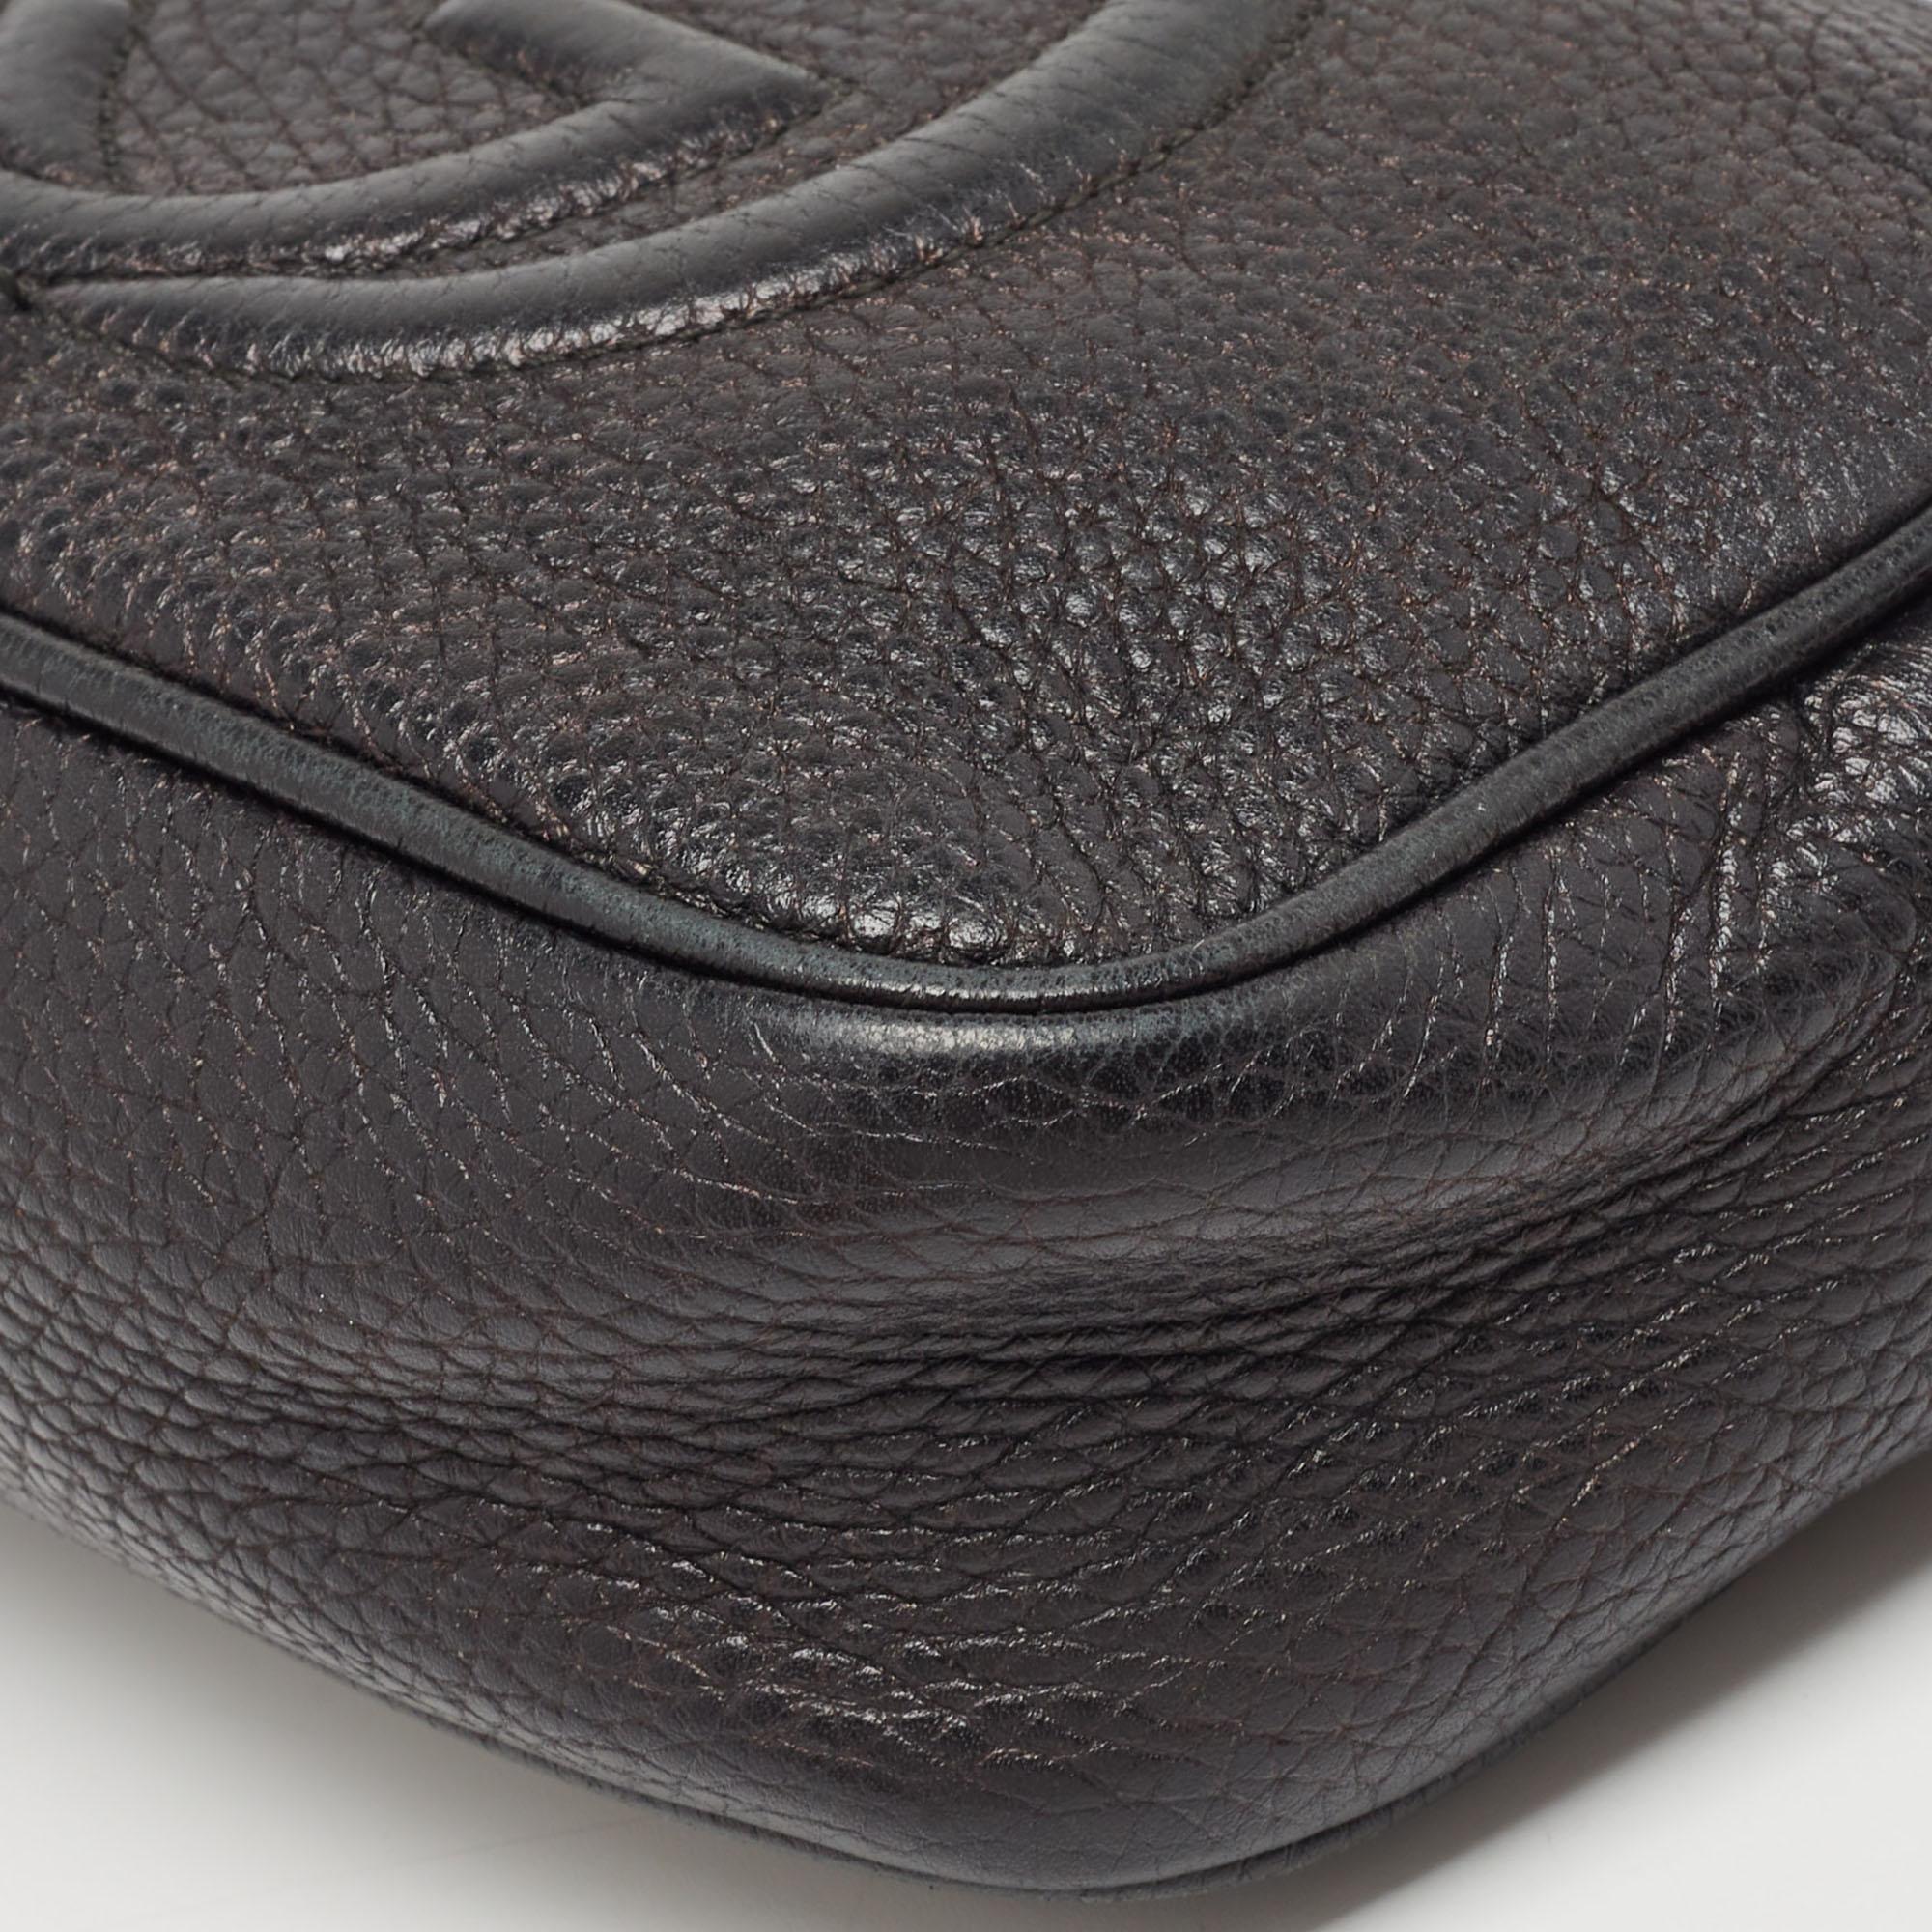 Gucci Black Leather Mini Soho Disco Shoulder Bag For Sale 6